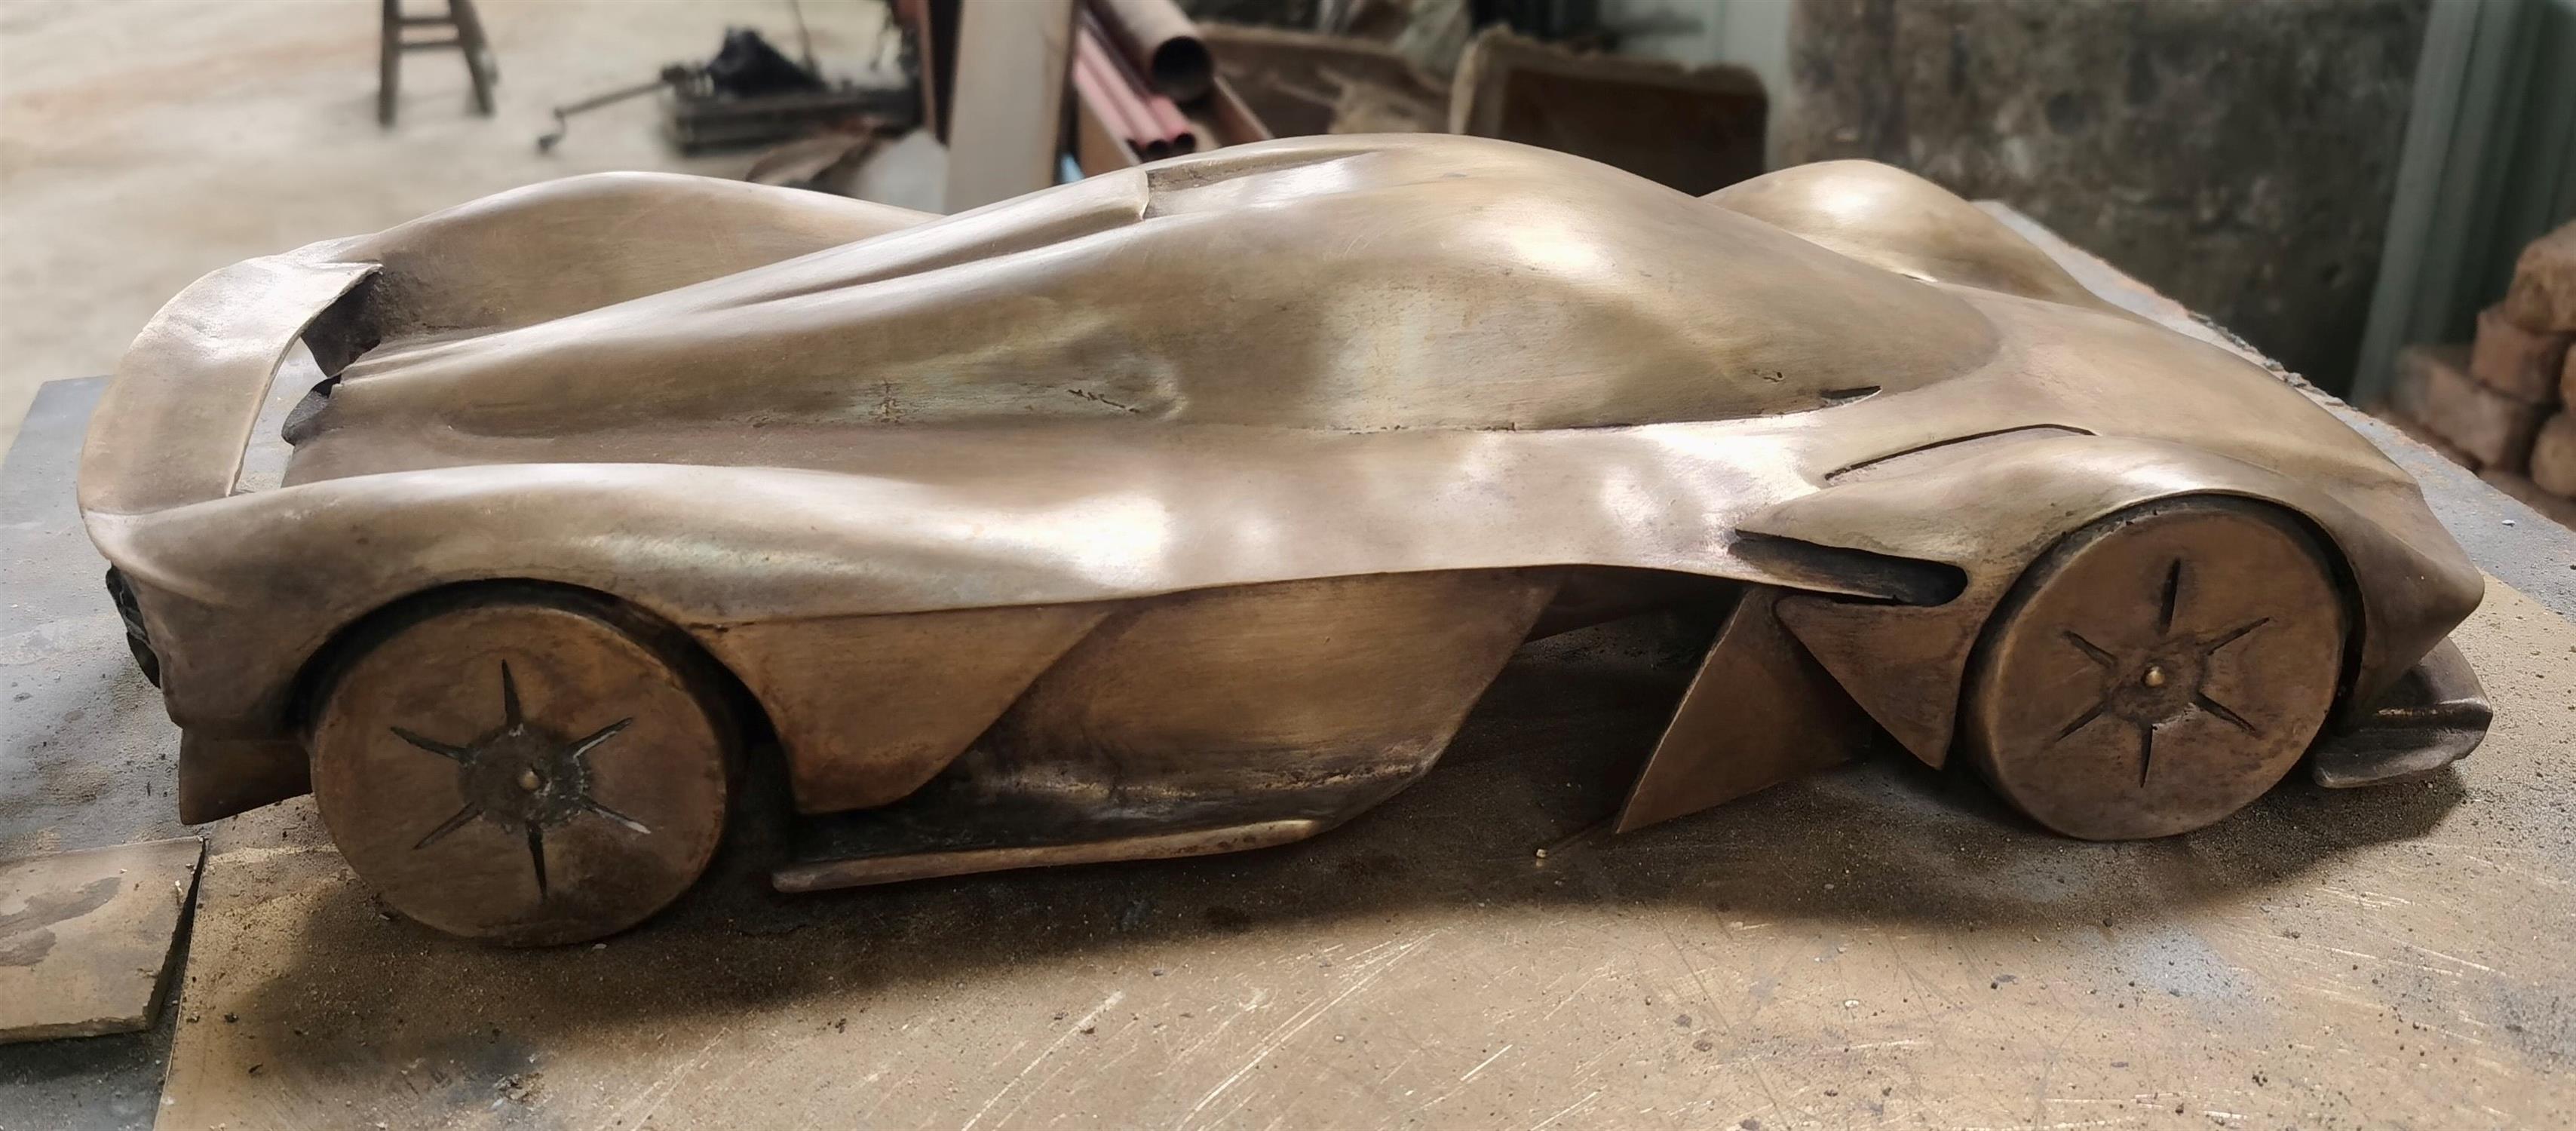 Aston Martin Valkyrie Brass sculpture - Image 3 of 4